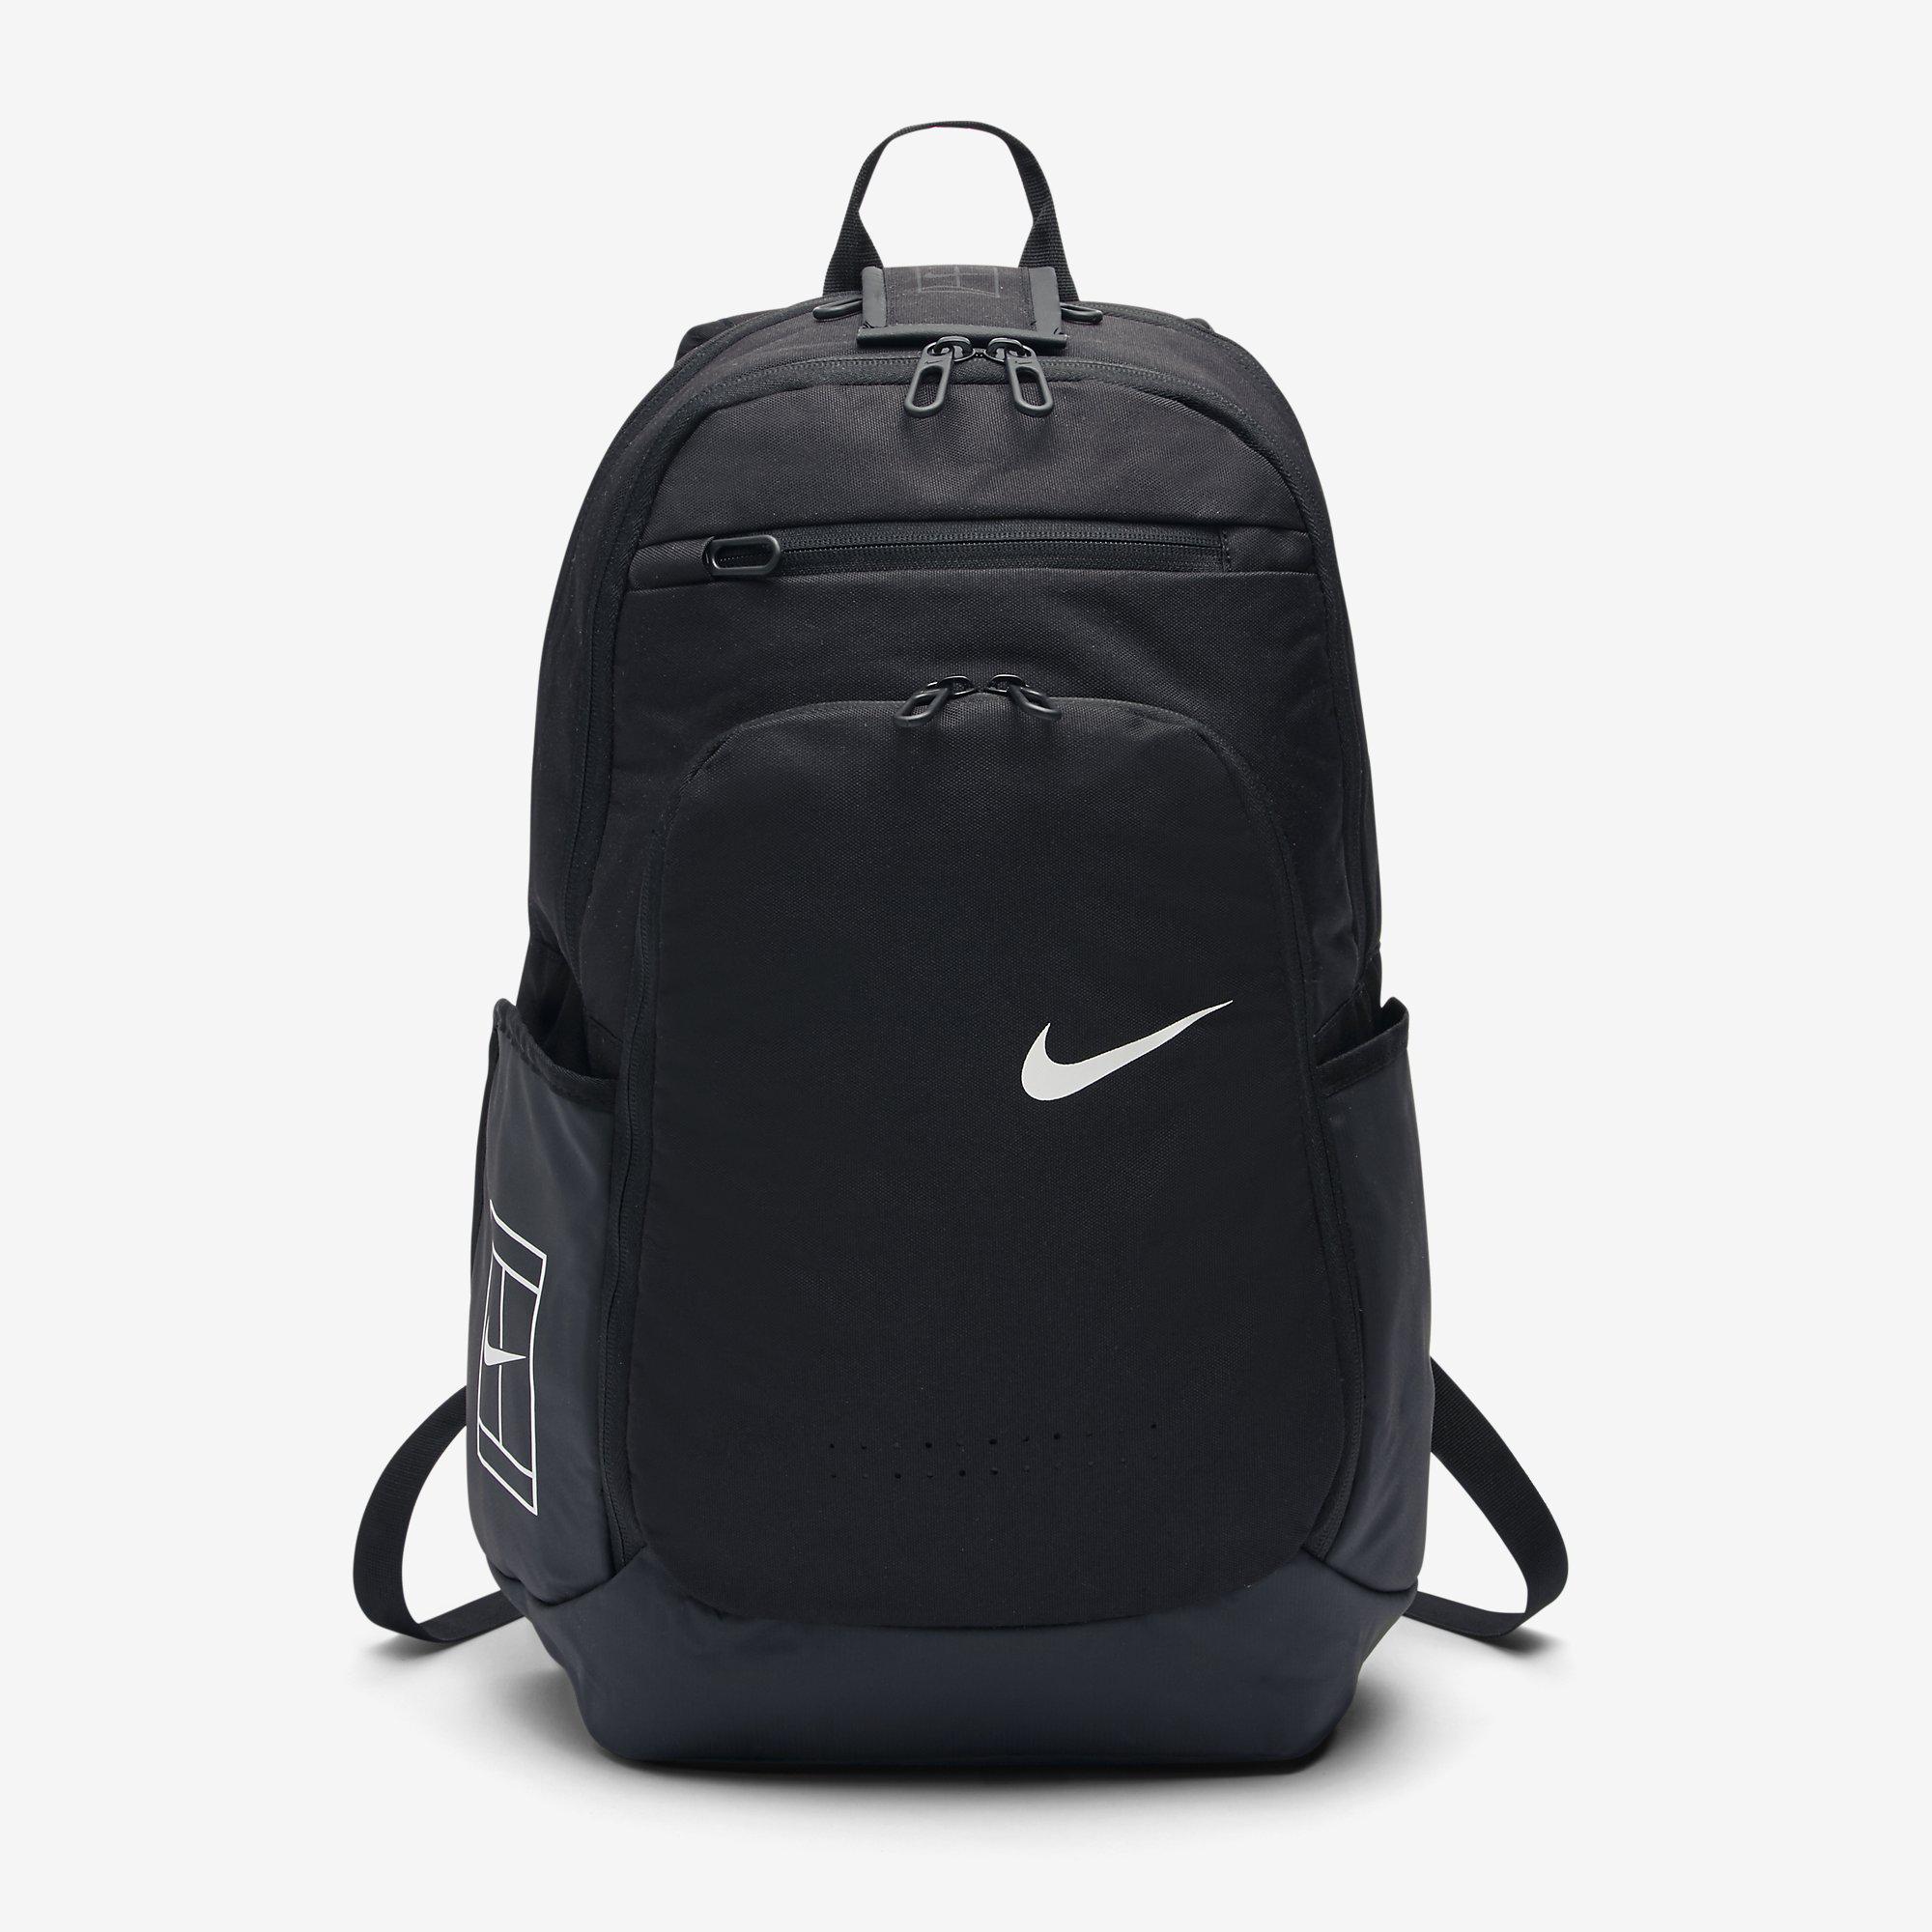 NikeCourt Tech 2.0 Tennis Backpack - Black - Tennisnuts.com